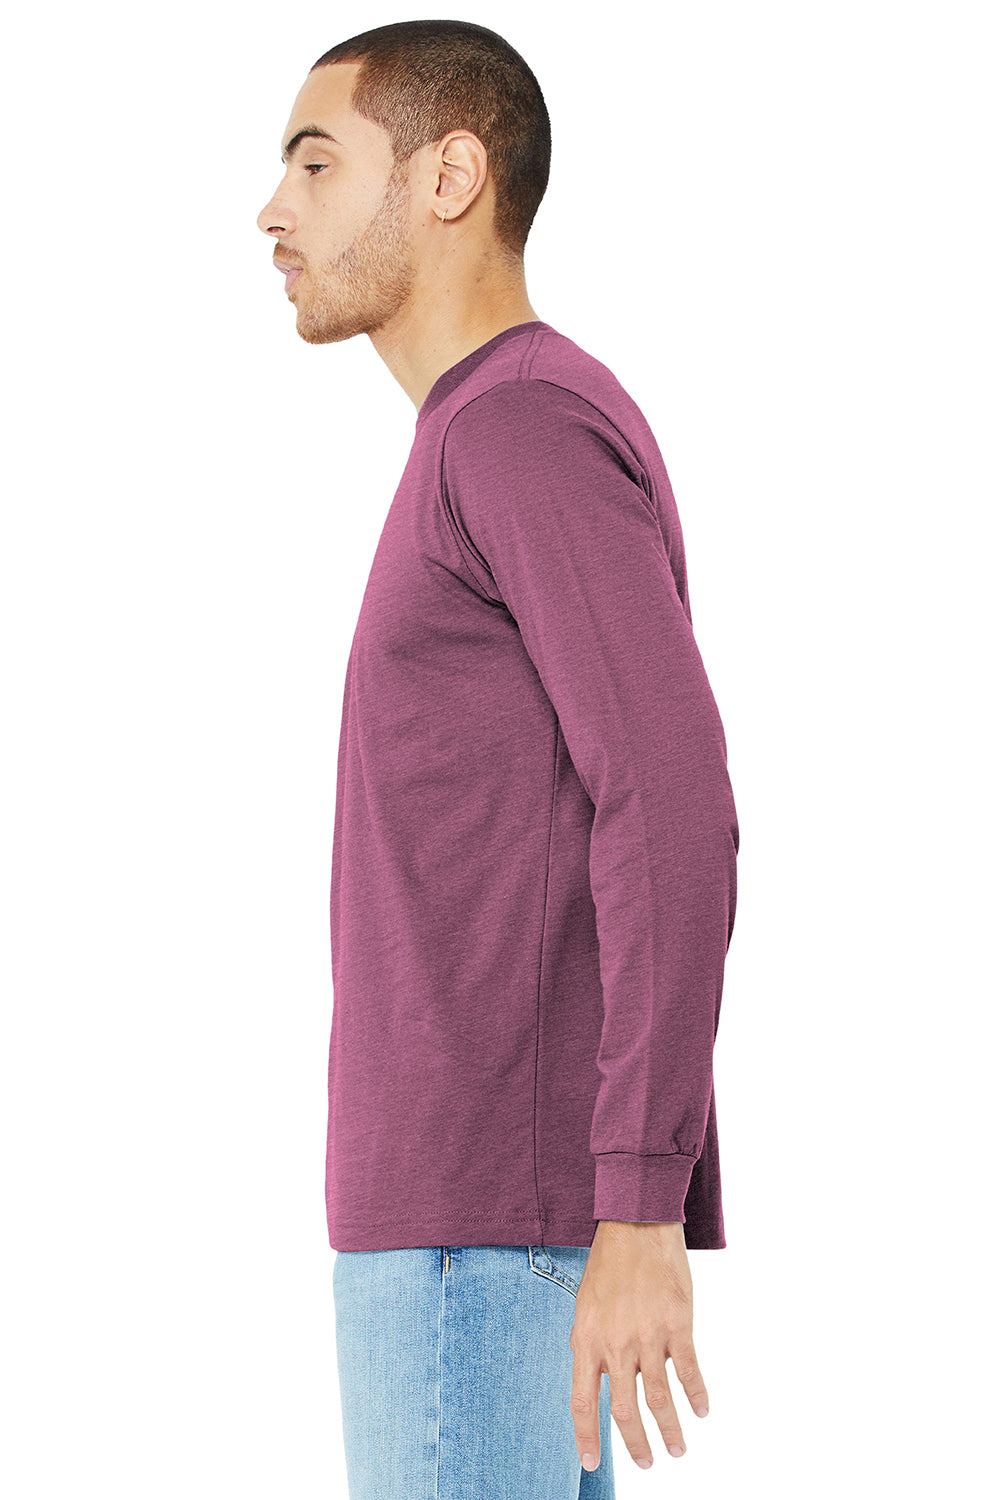 Bella + Canvas BC3501/3501 Mens Jersey Long Sleeve Crewneck T-Shirt Maroon Triblend Model Side